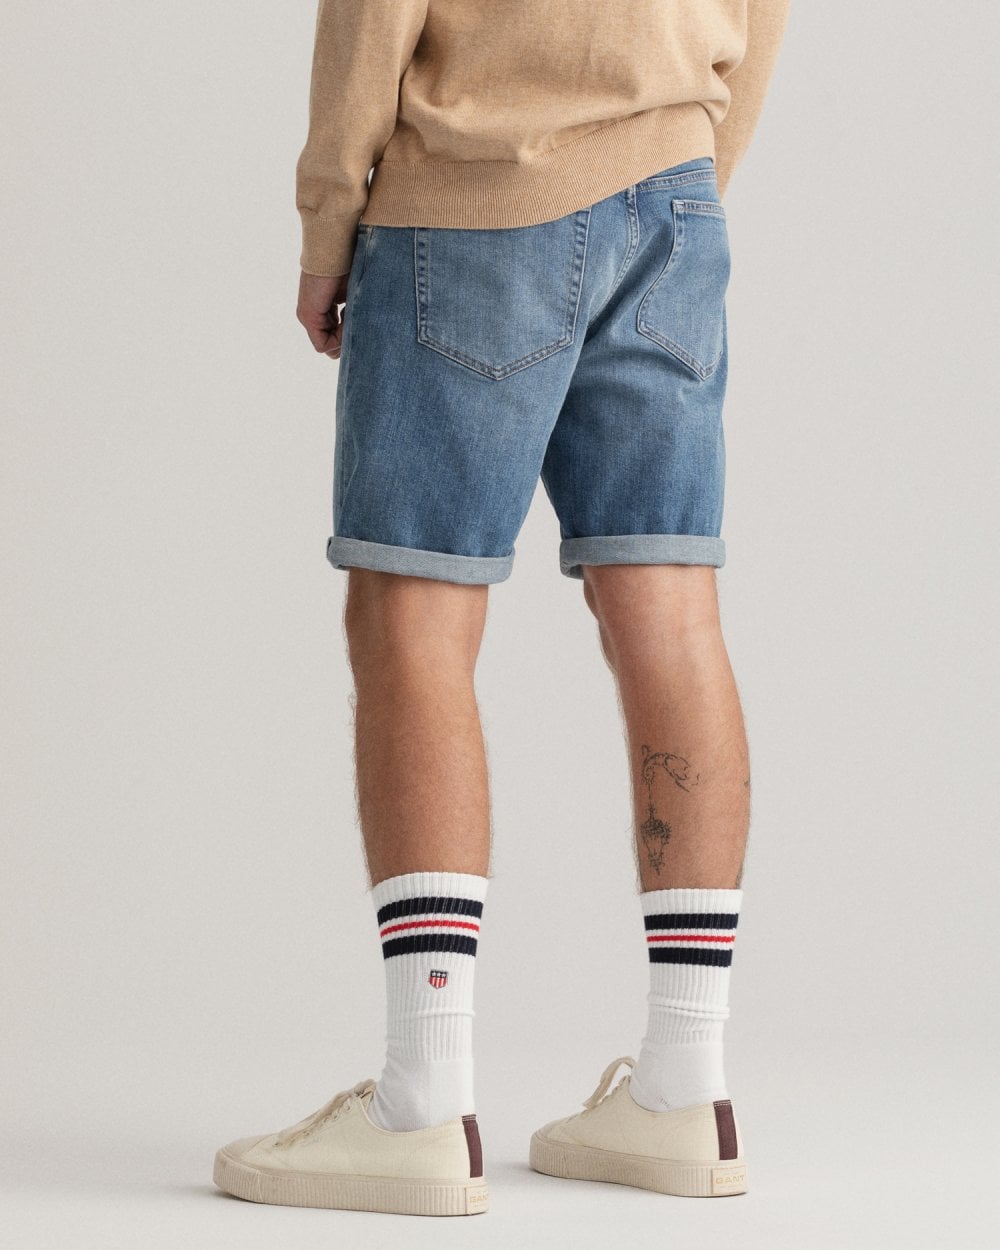 Arley Regular Fit Jean Shorts